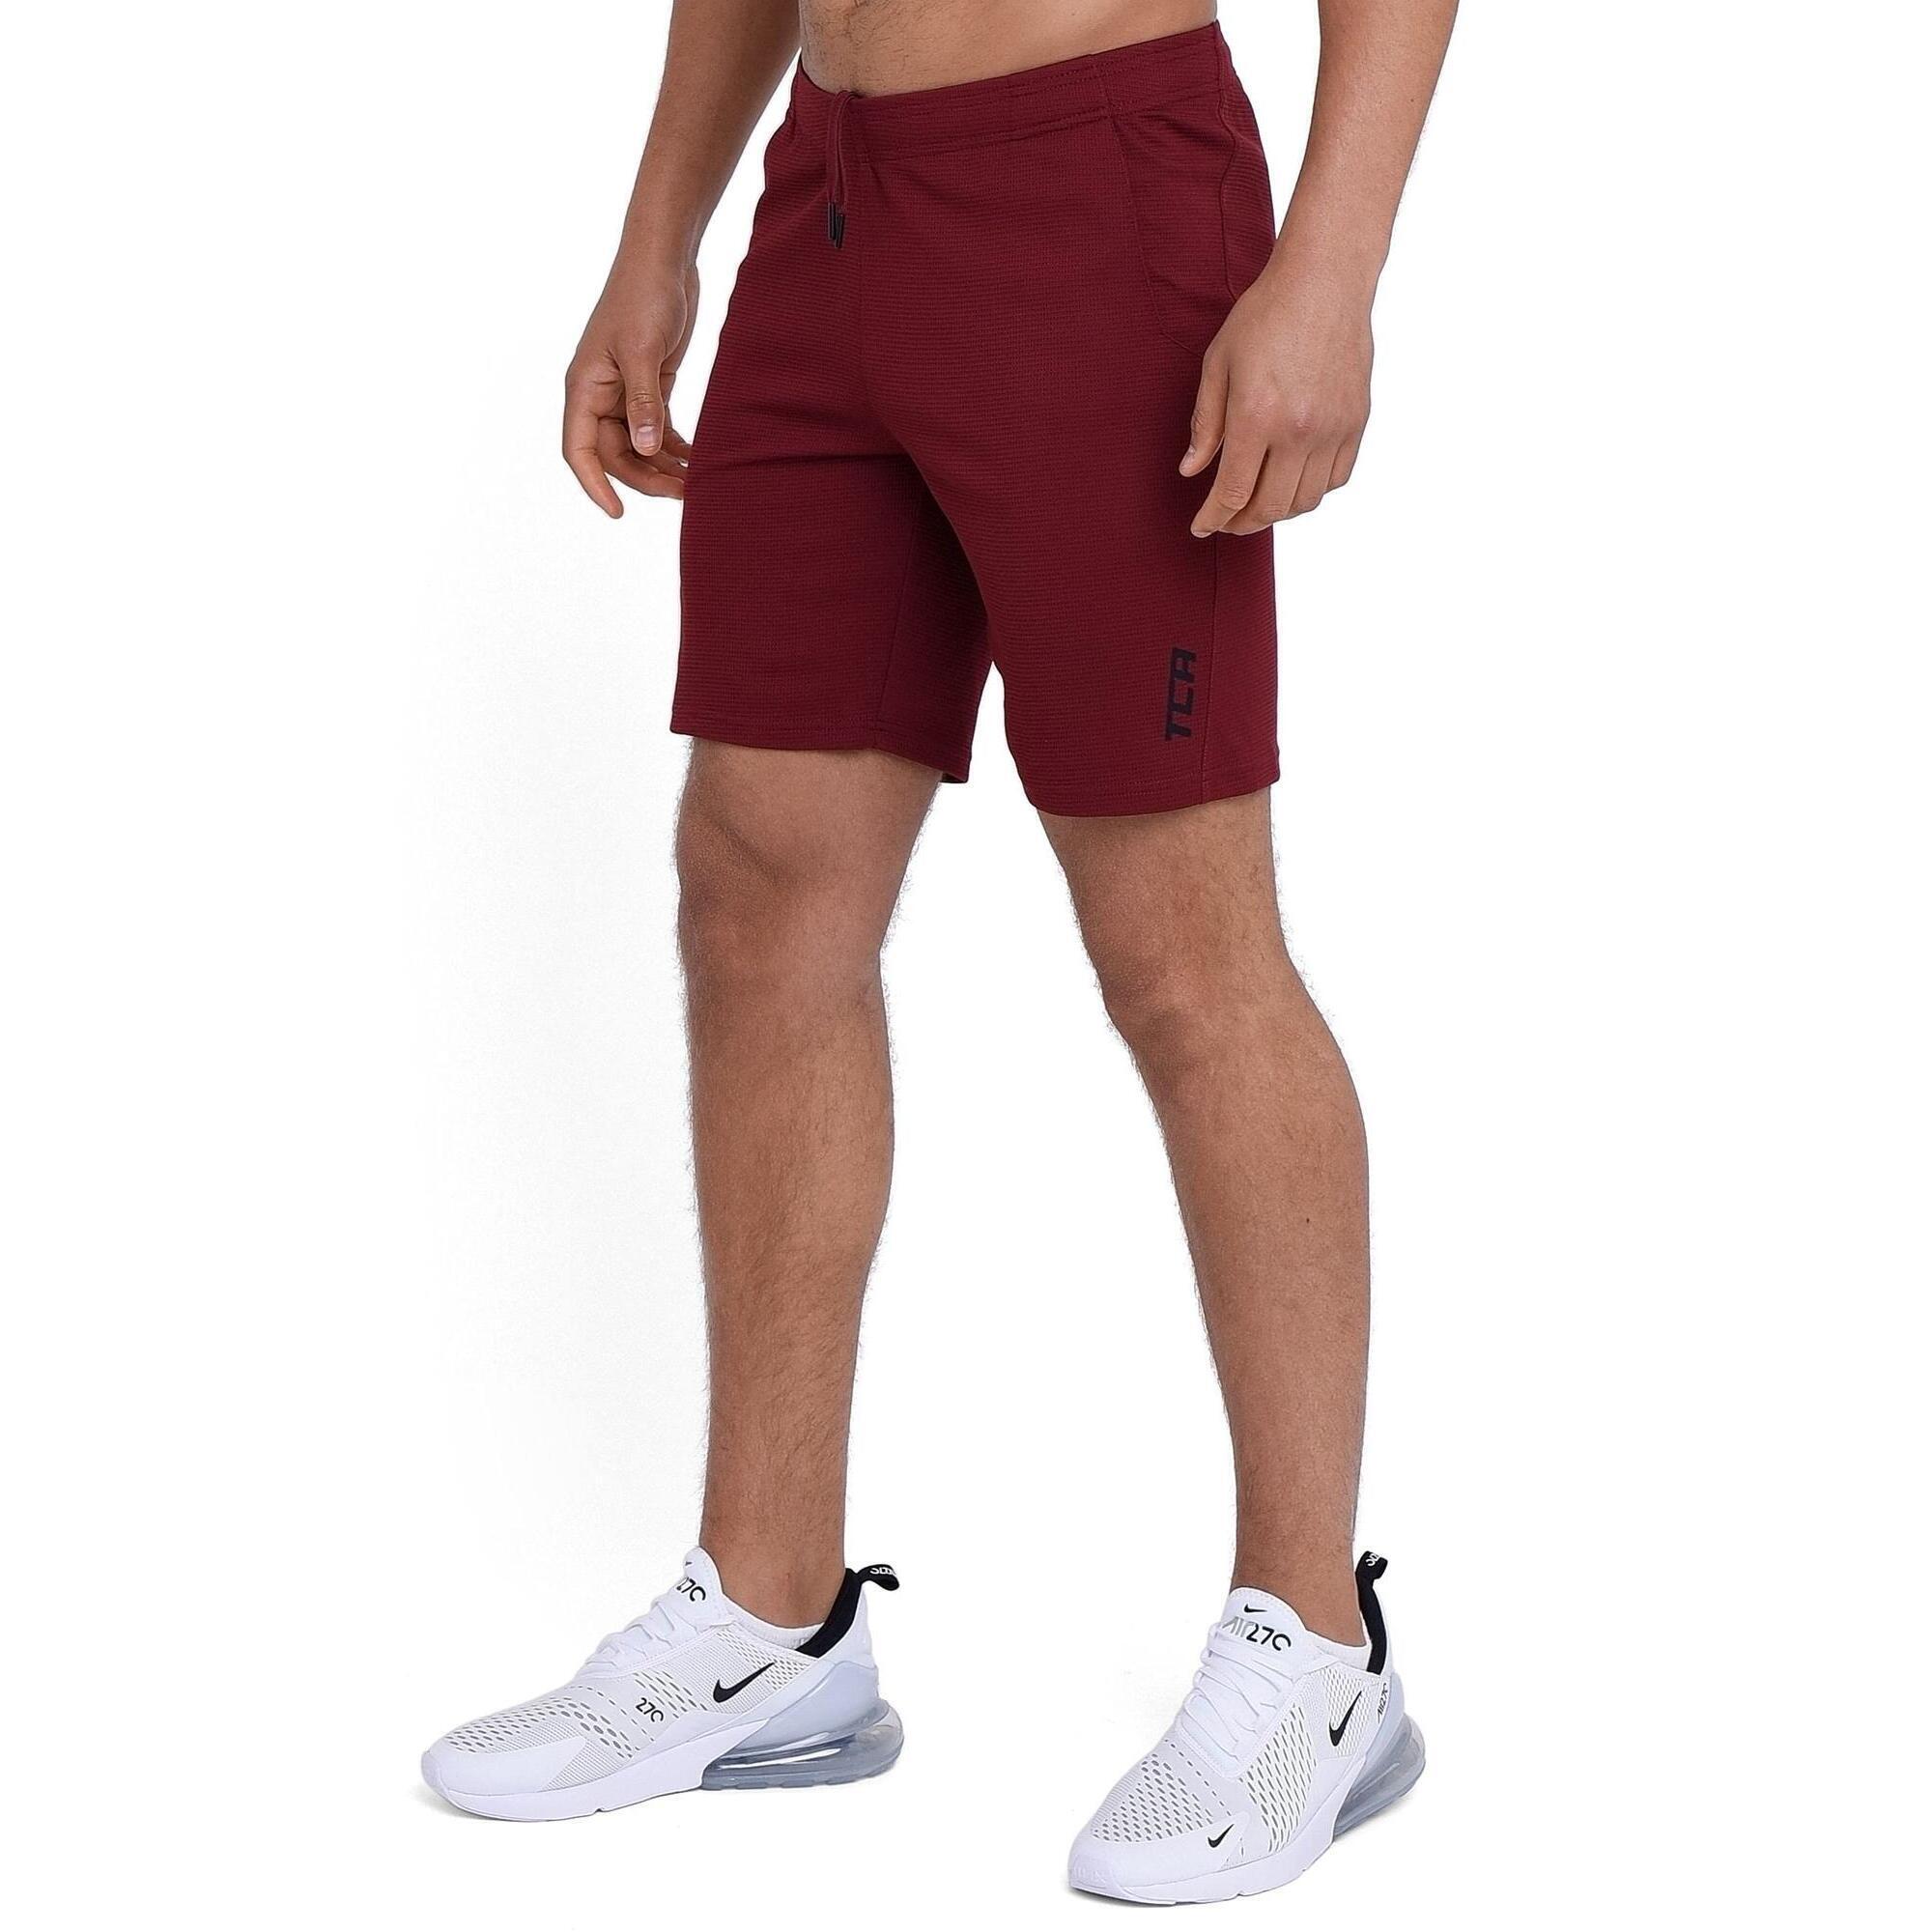 TCA Men's Aeron Short with Pockets